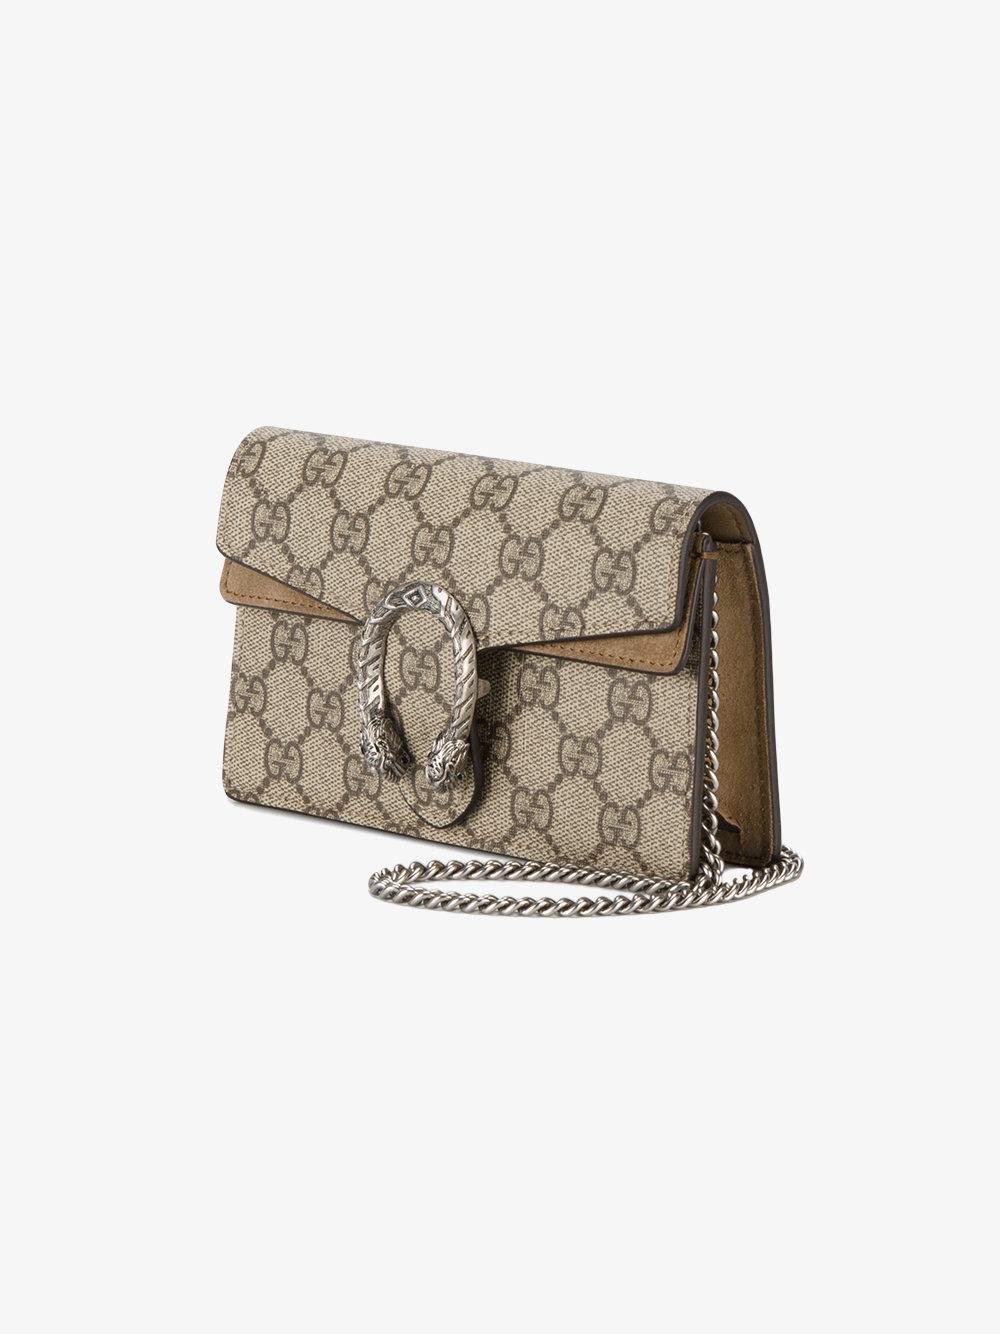 Gucci Dionysus GG Supreme Mini Shoulder Bag Beige